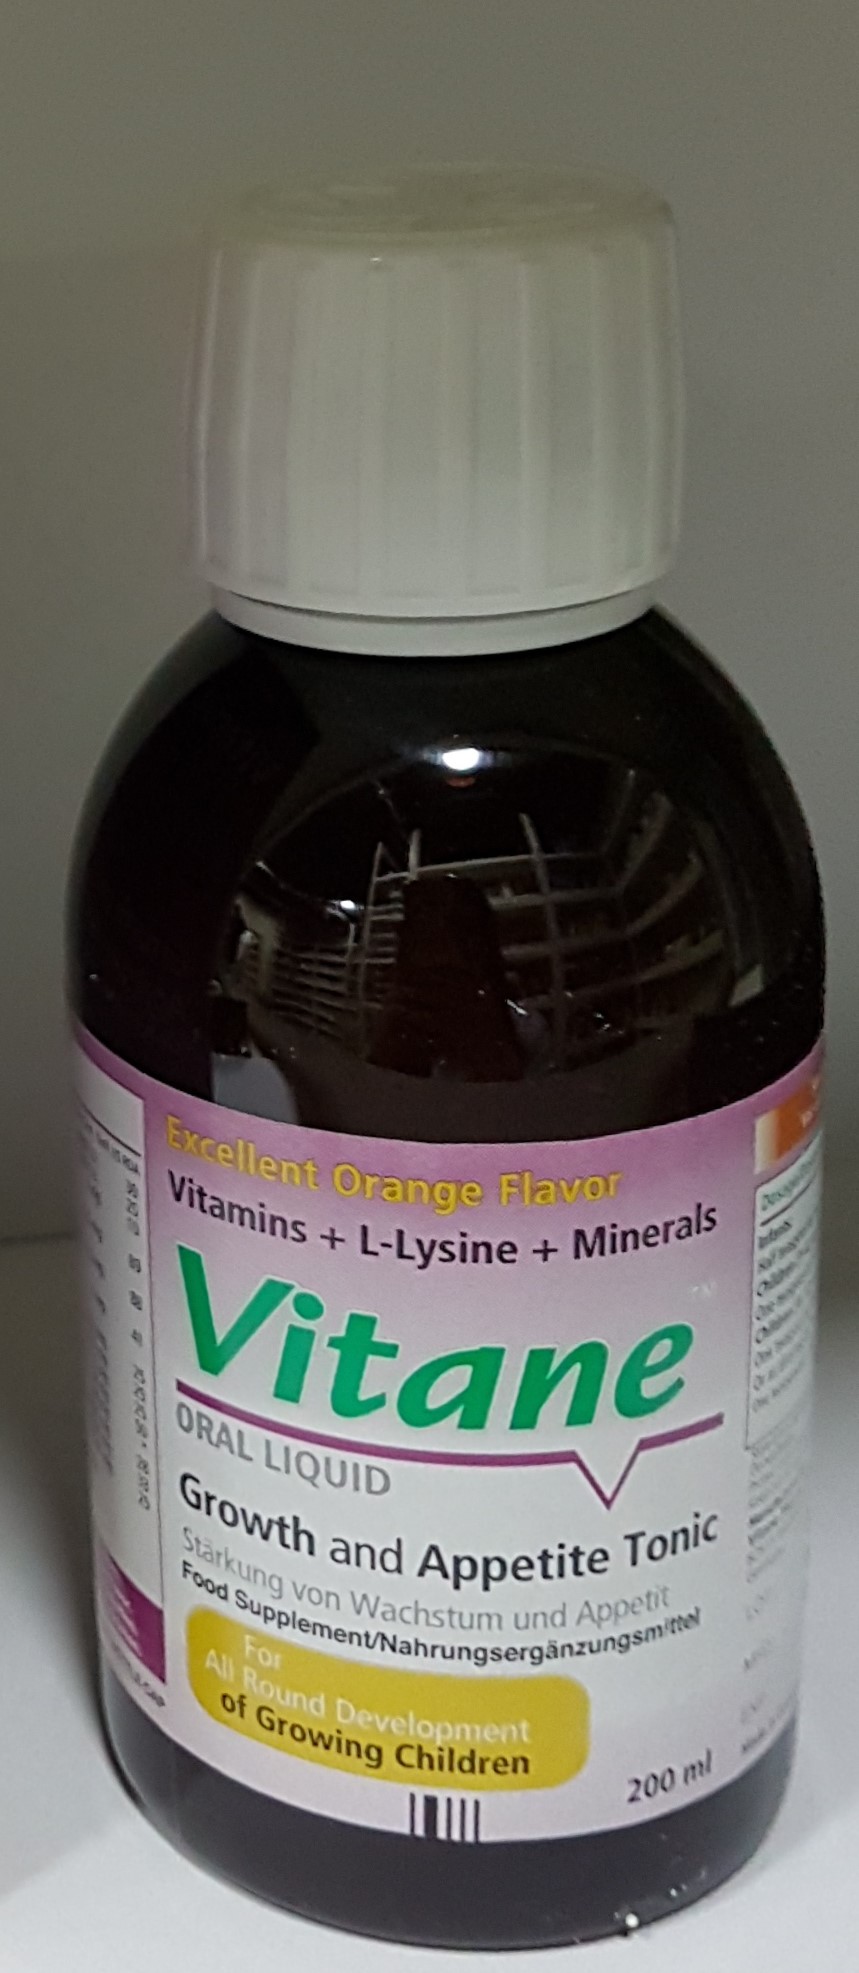 Vitane Liquid